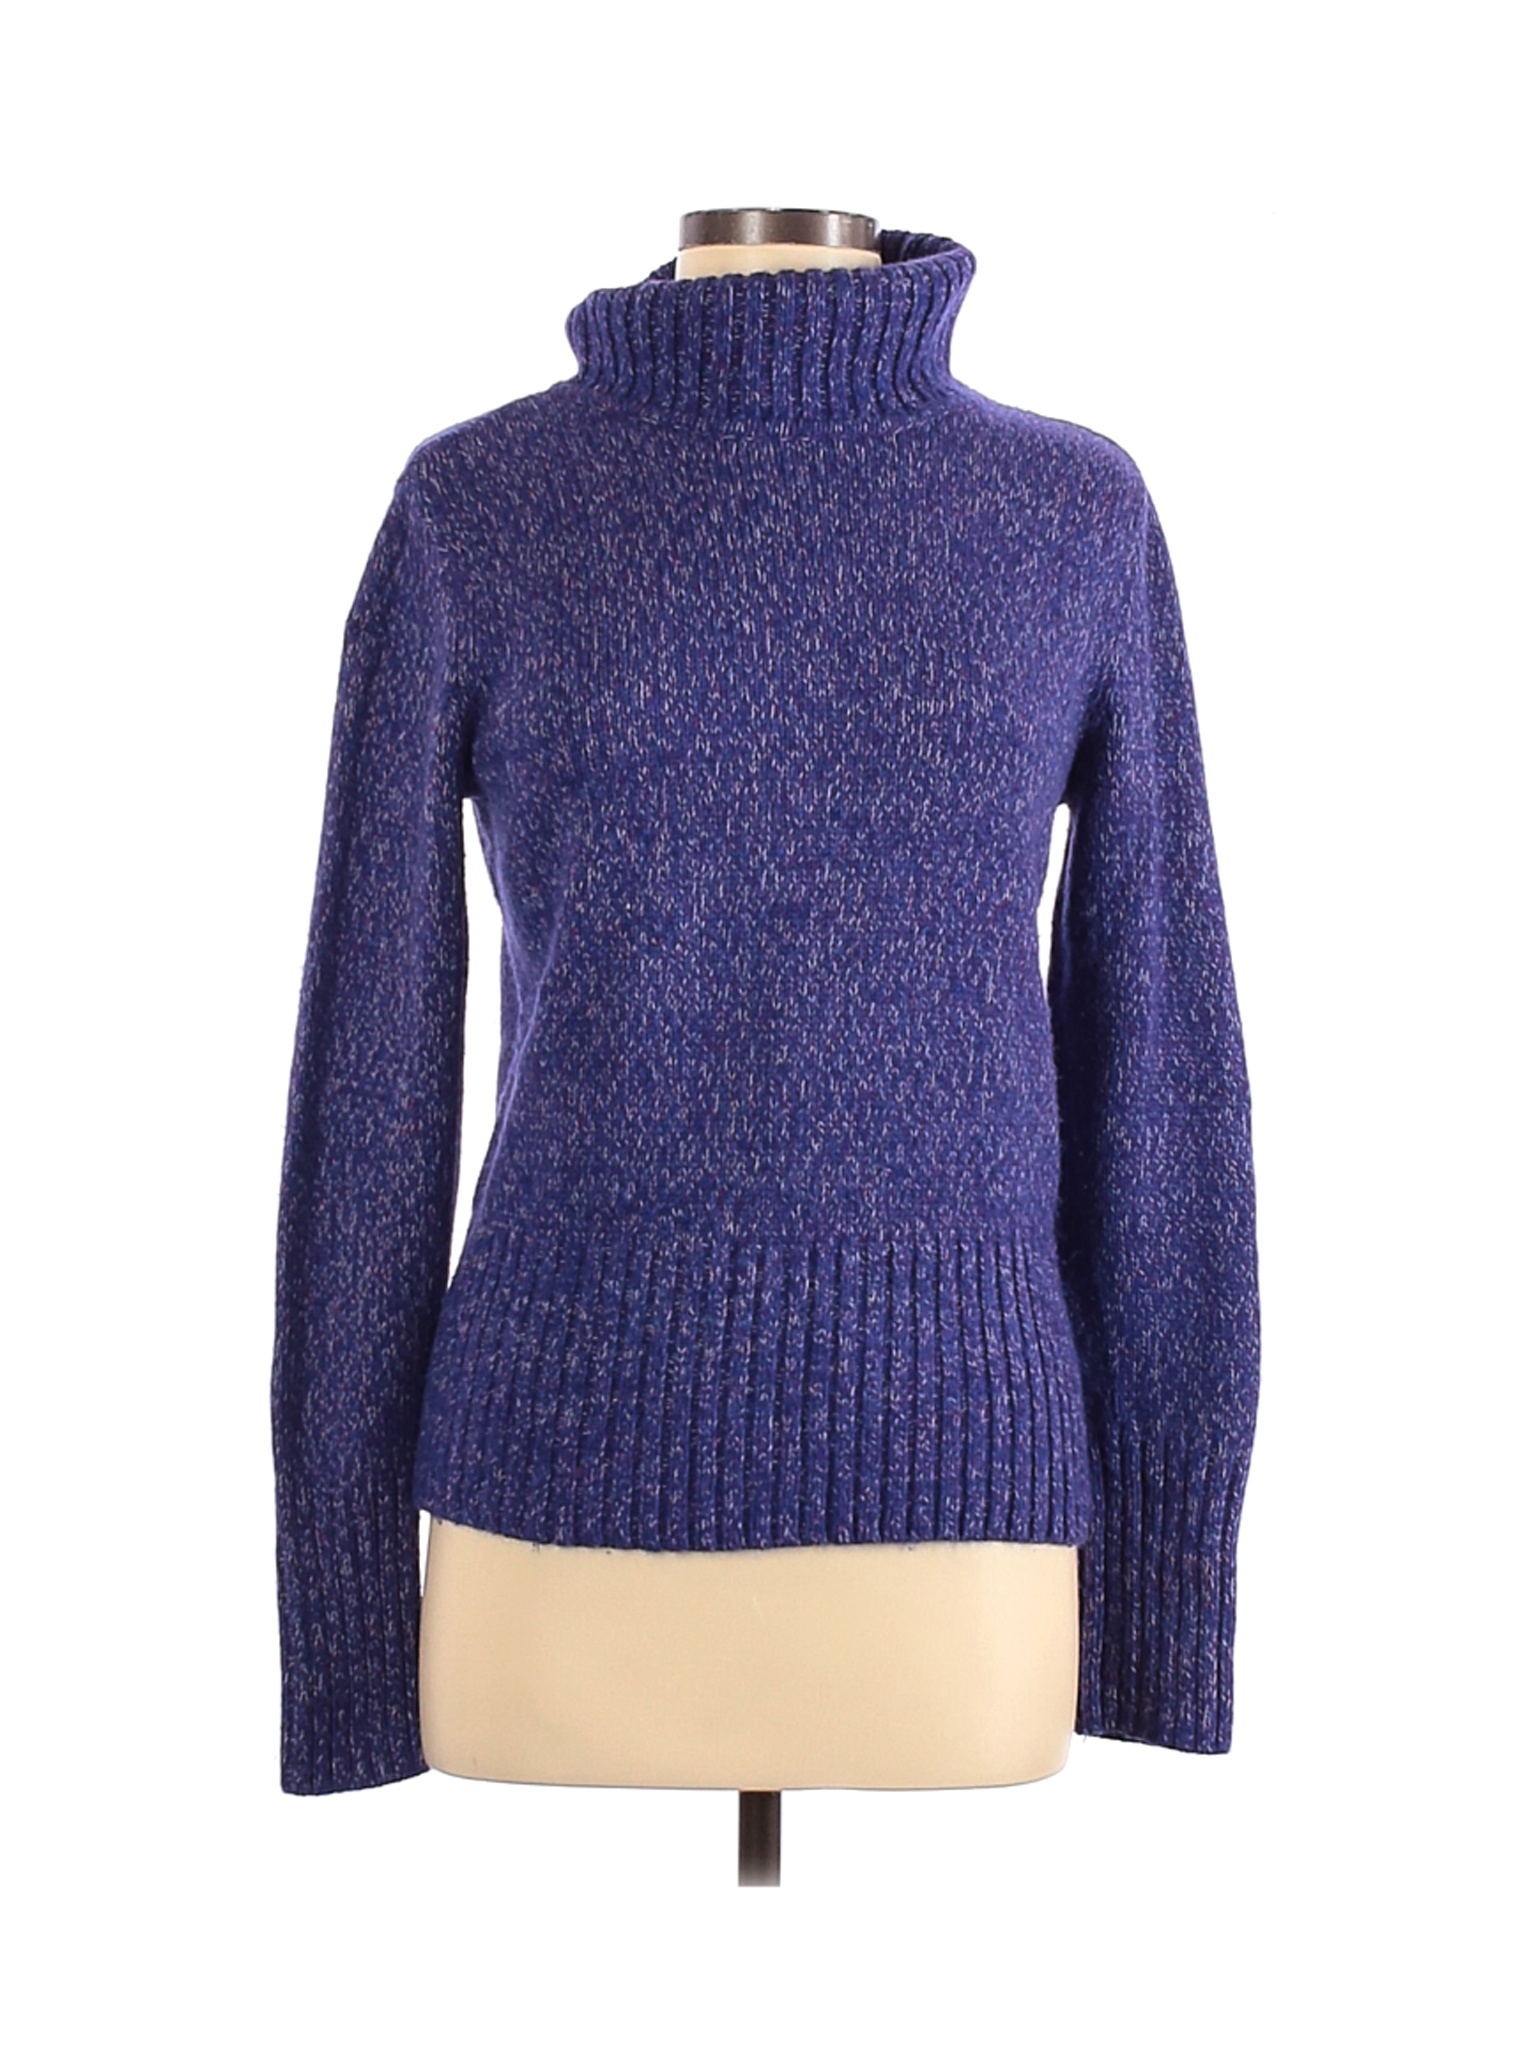 Daisy Fuentes Women Purple Turtleneck Sweater M | eBay